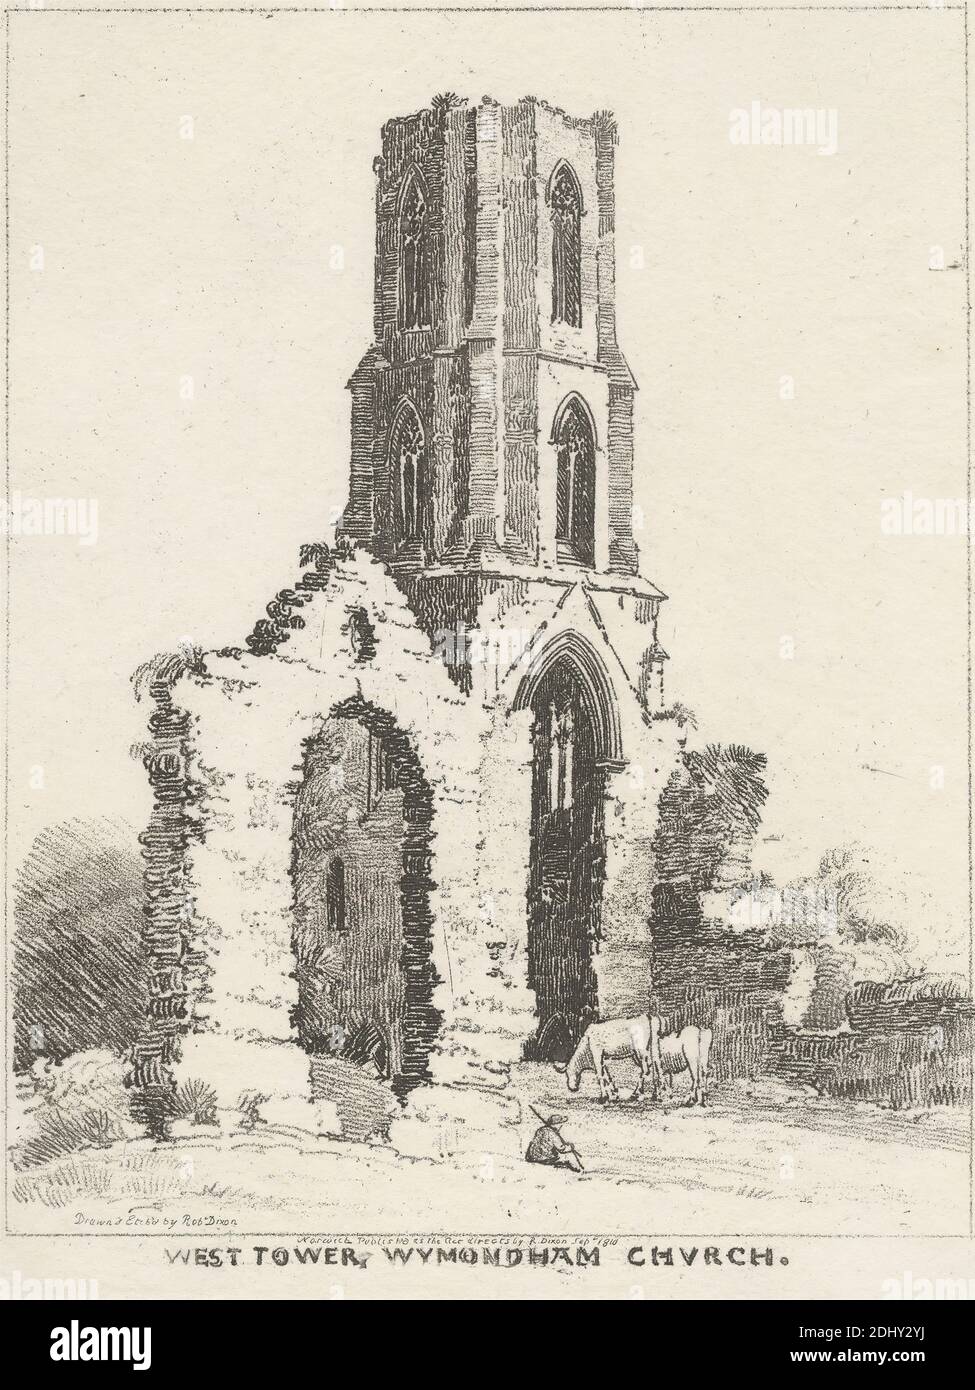 West Tower, Wymondham Church, Robert Dixon, 1780–1815, British, after Robert Dixon, 1780–1815, British, Published by Robert Dixon, 1780–1815, British, 1810, Soft-ground etching on medium, slightly textured, cream wove paper, Sheet: 10 11/16 x 8 1/4 inches (27.1 x 21 cm), Plate: 9 3/4 x 7 7/8 inches (24.7 x 20 cm), and Image: 8 3/4 x 6 15/16 inches (22.3 x 17.6 cm), arches, architectural subject, church, cows, genre subject, grass, grazing, illustration, man, ruins, shepherd, sitting, tower (building division), windows, woods, England, Europe, Norfolk, United Kingdom, Wymondham Stock Photo